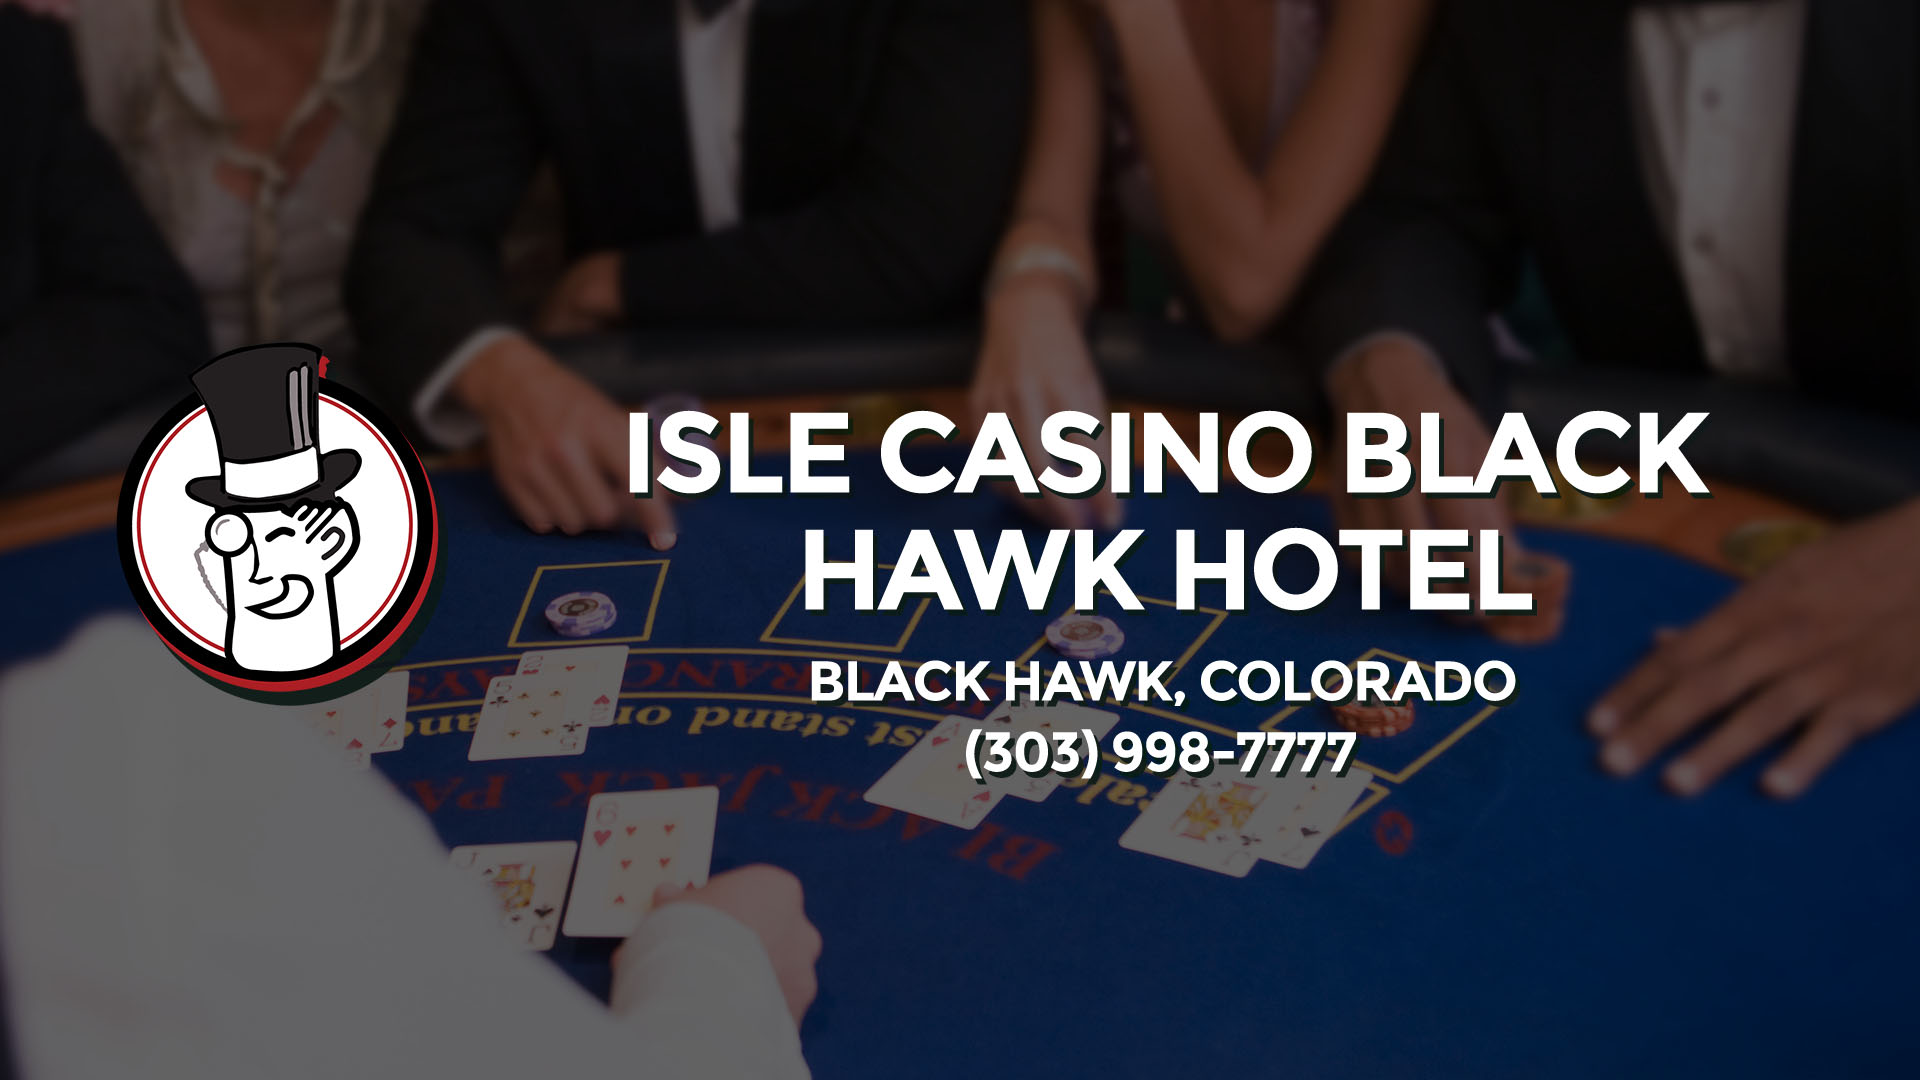 black hawk casino gift cards